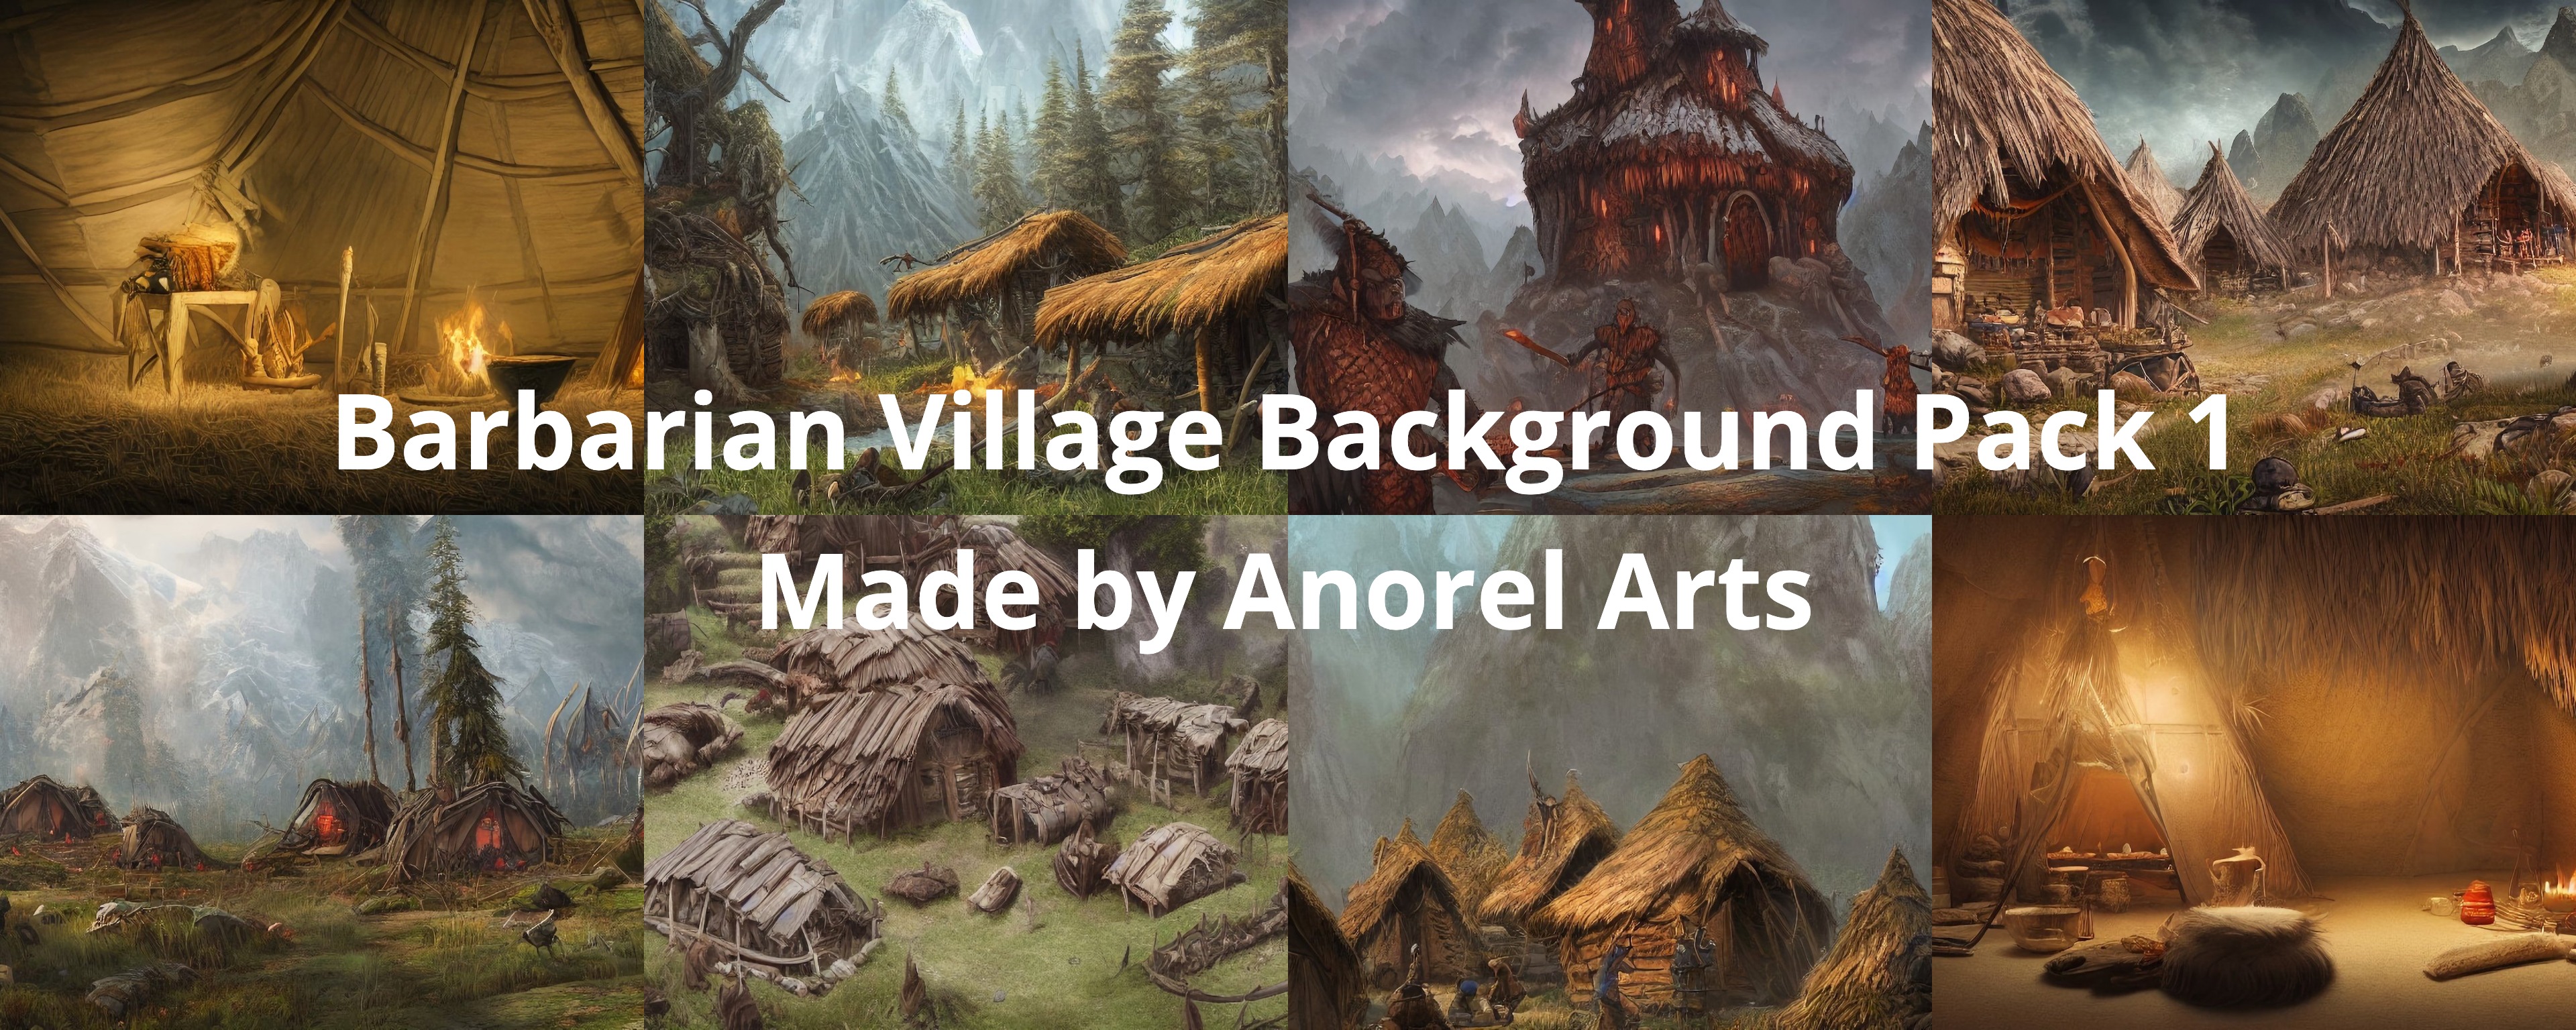 Barbarian Village Background Pack 1